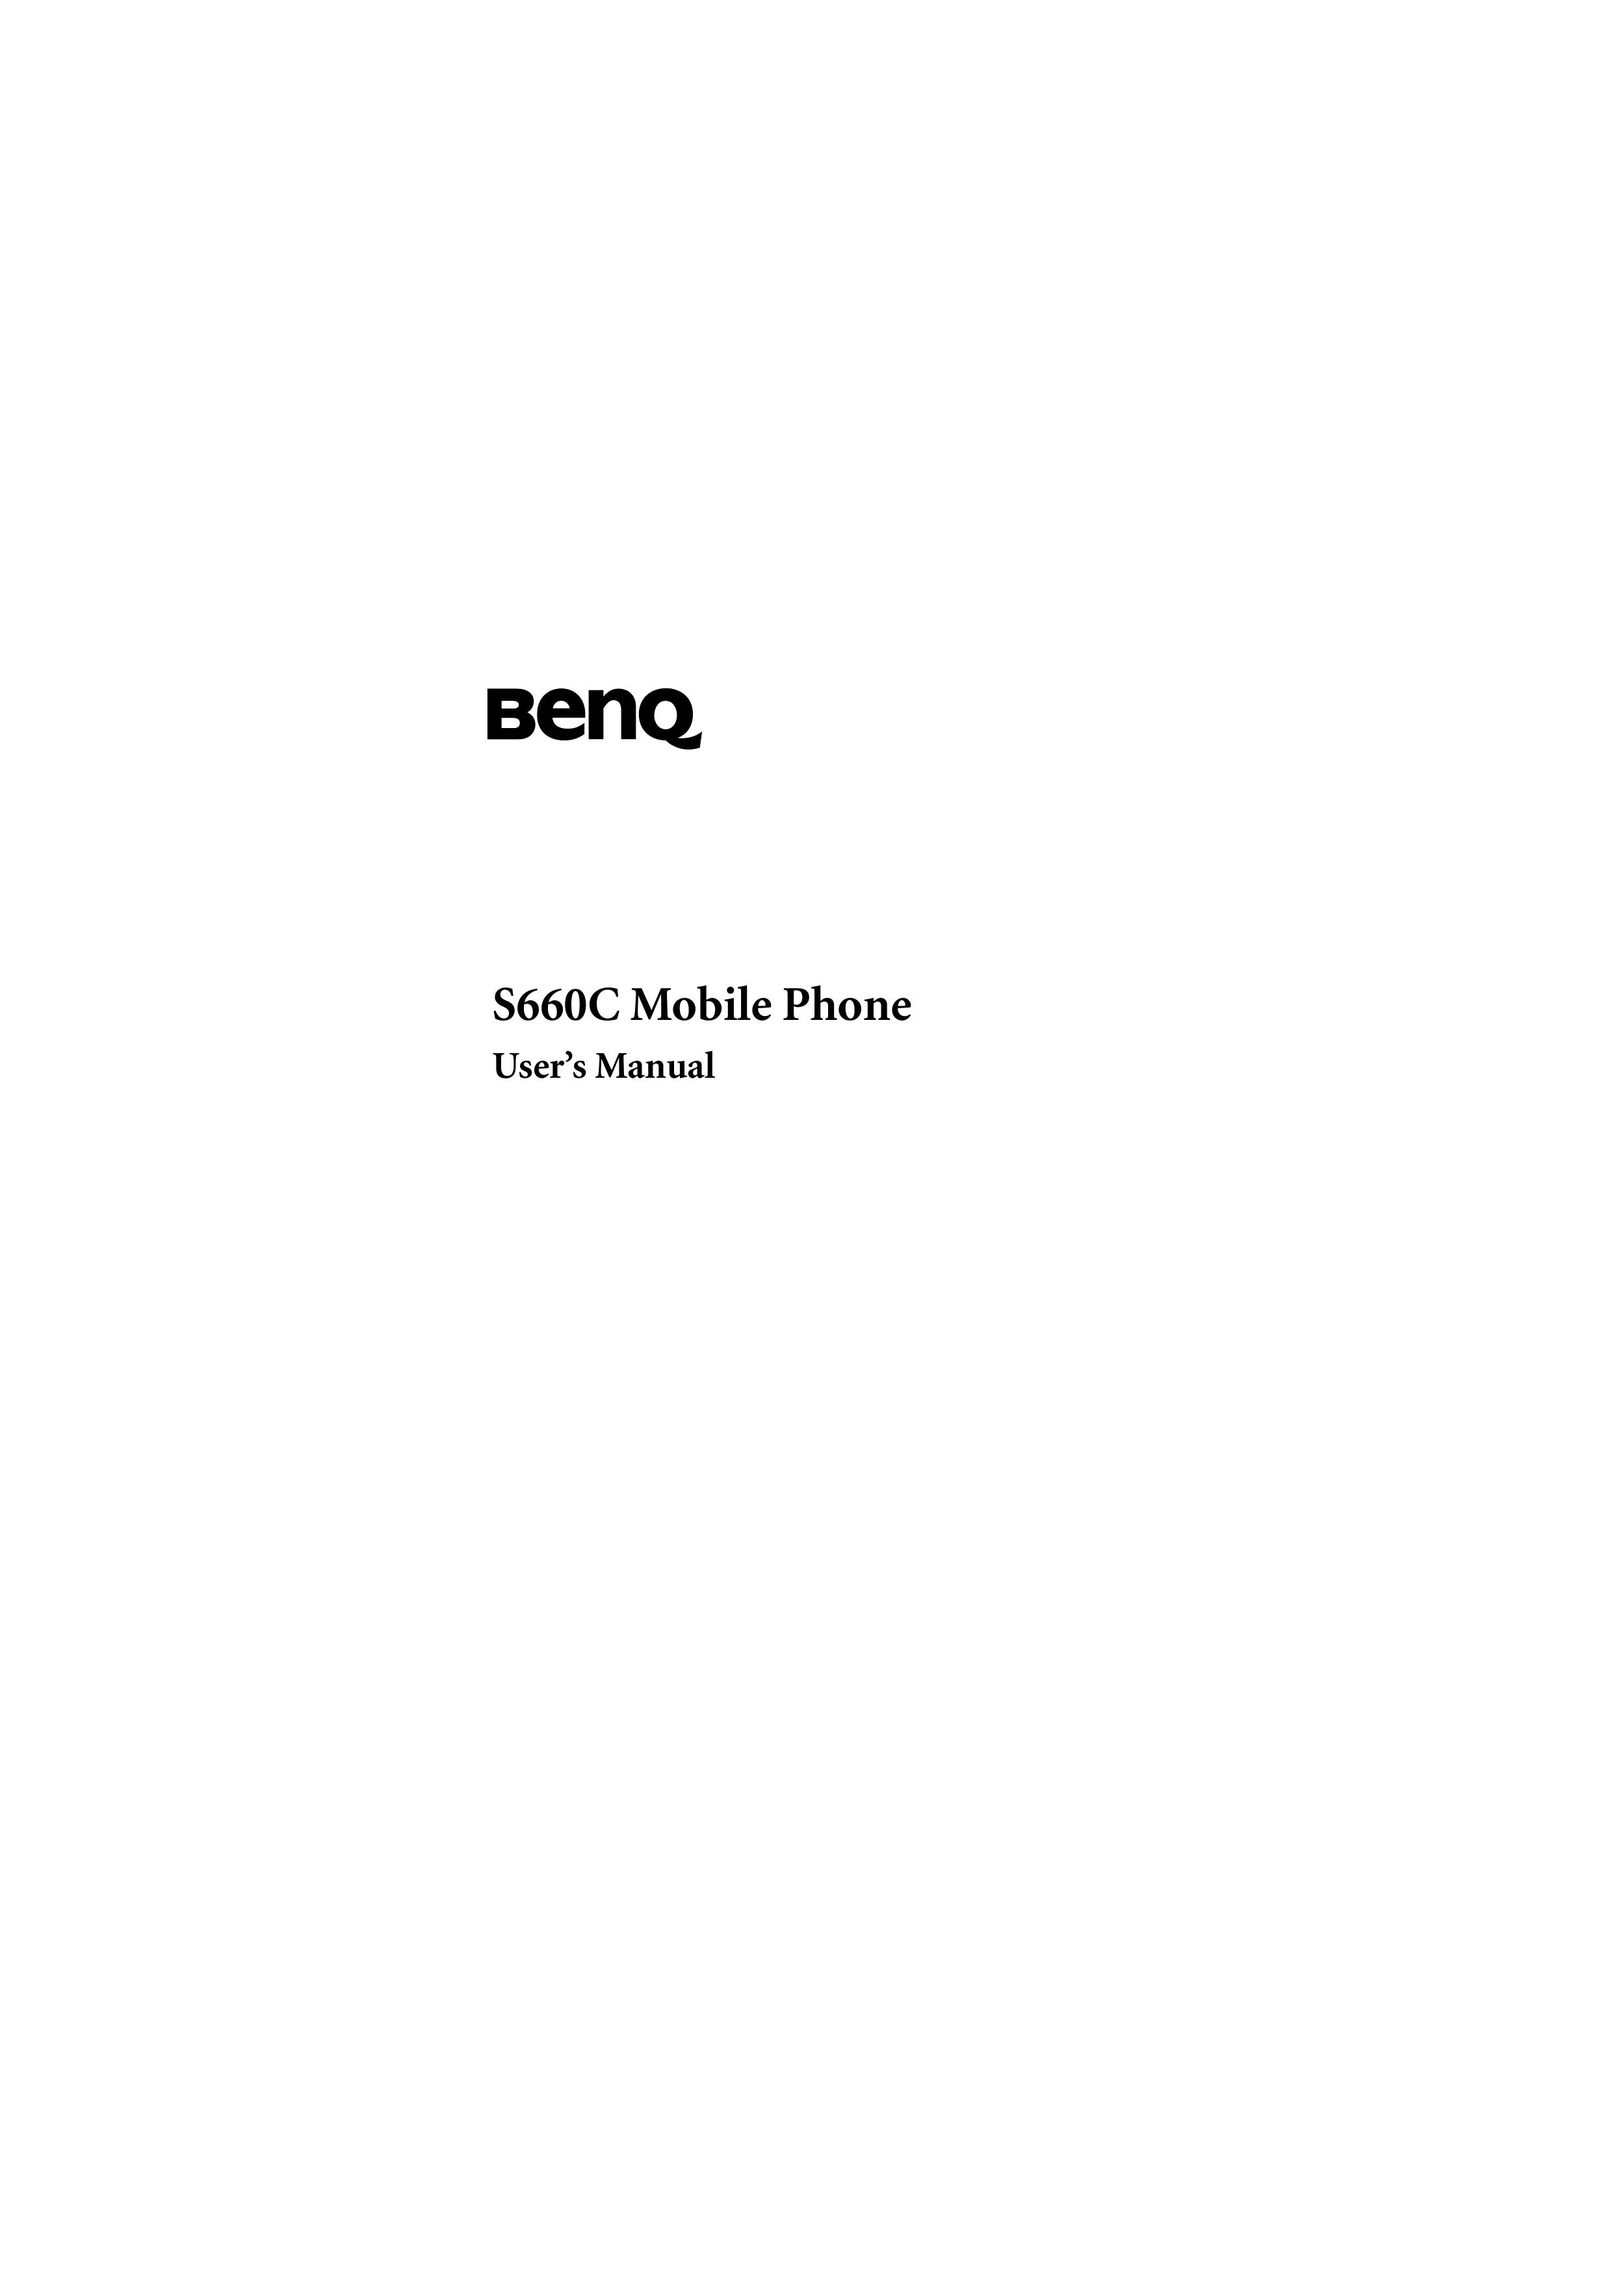 BenQ S660C Cell Phone User Manual